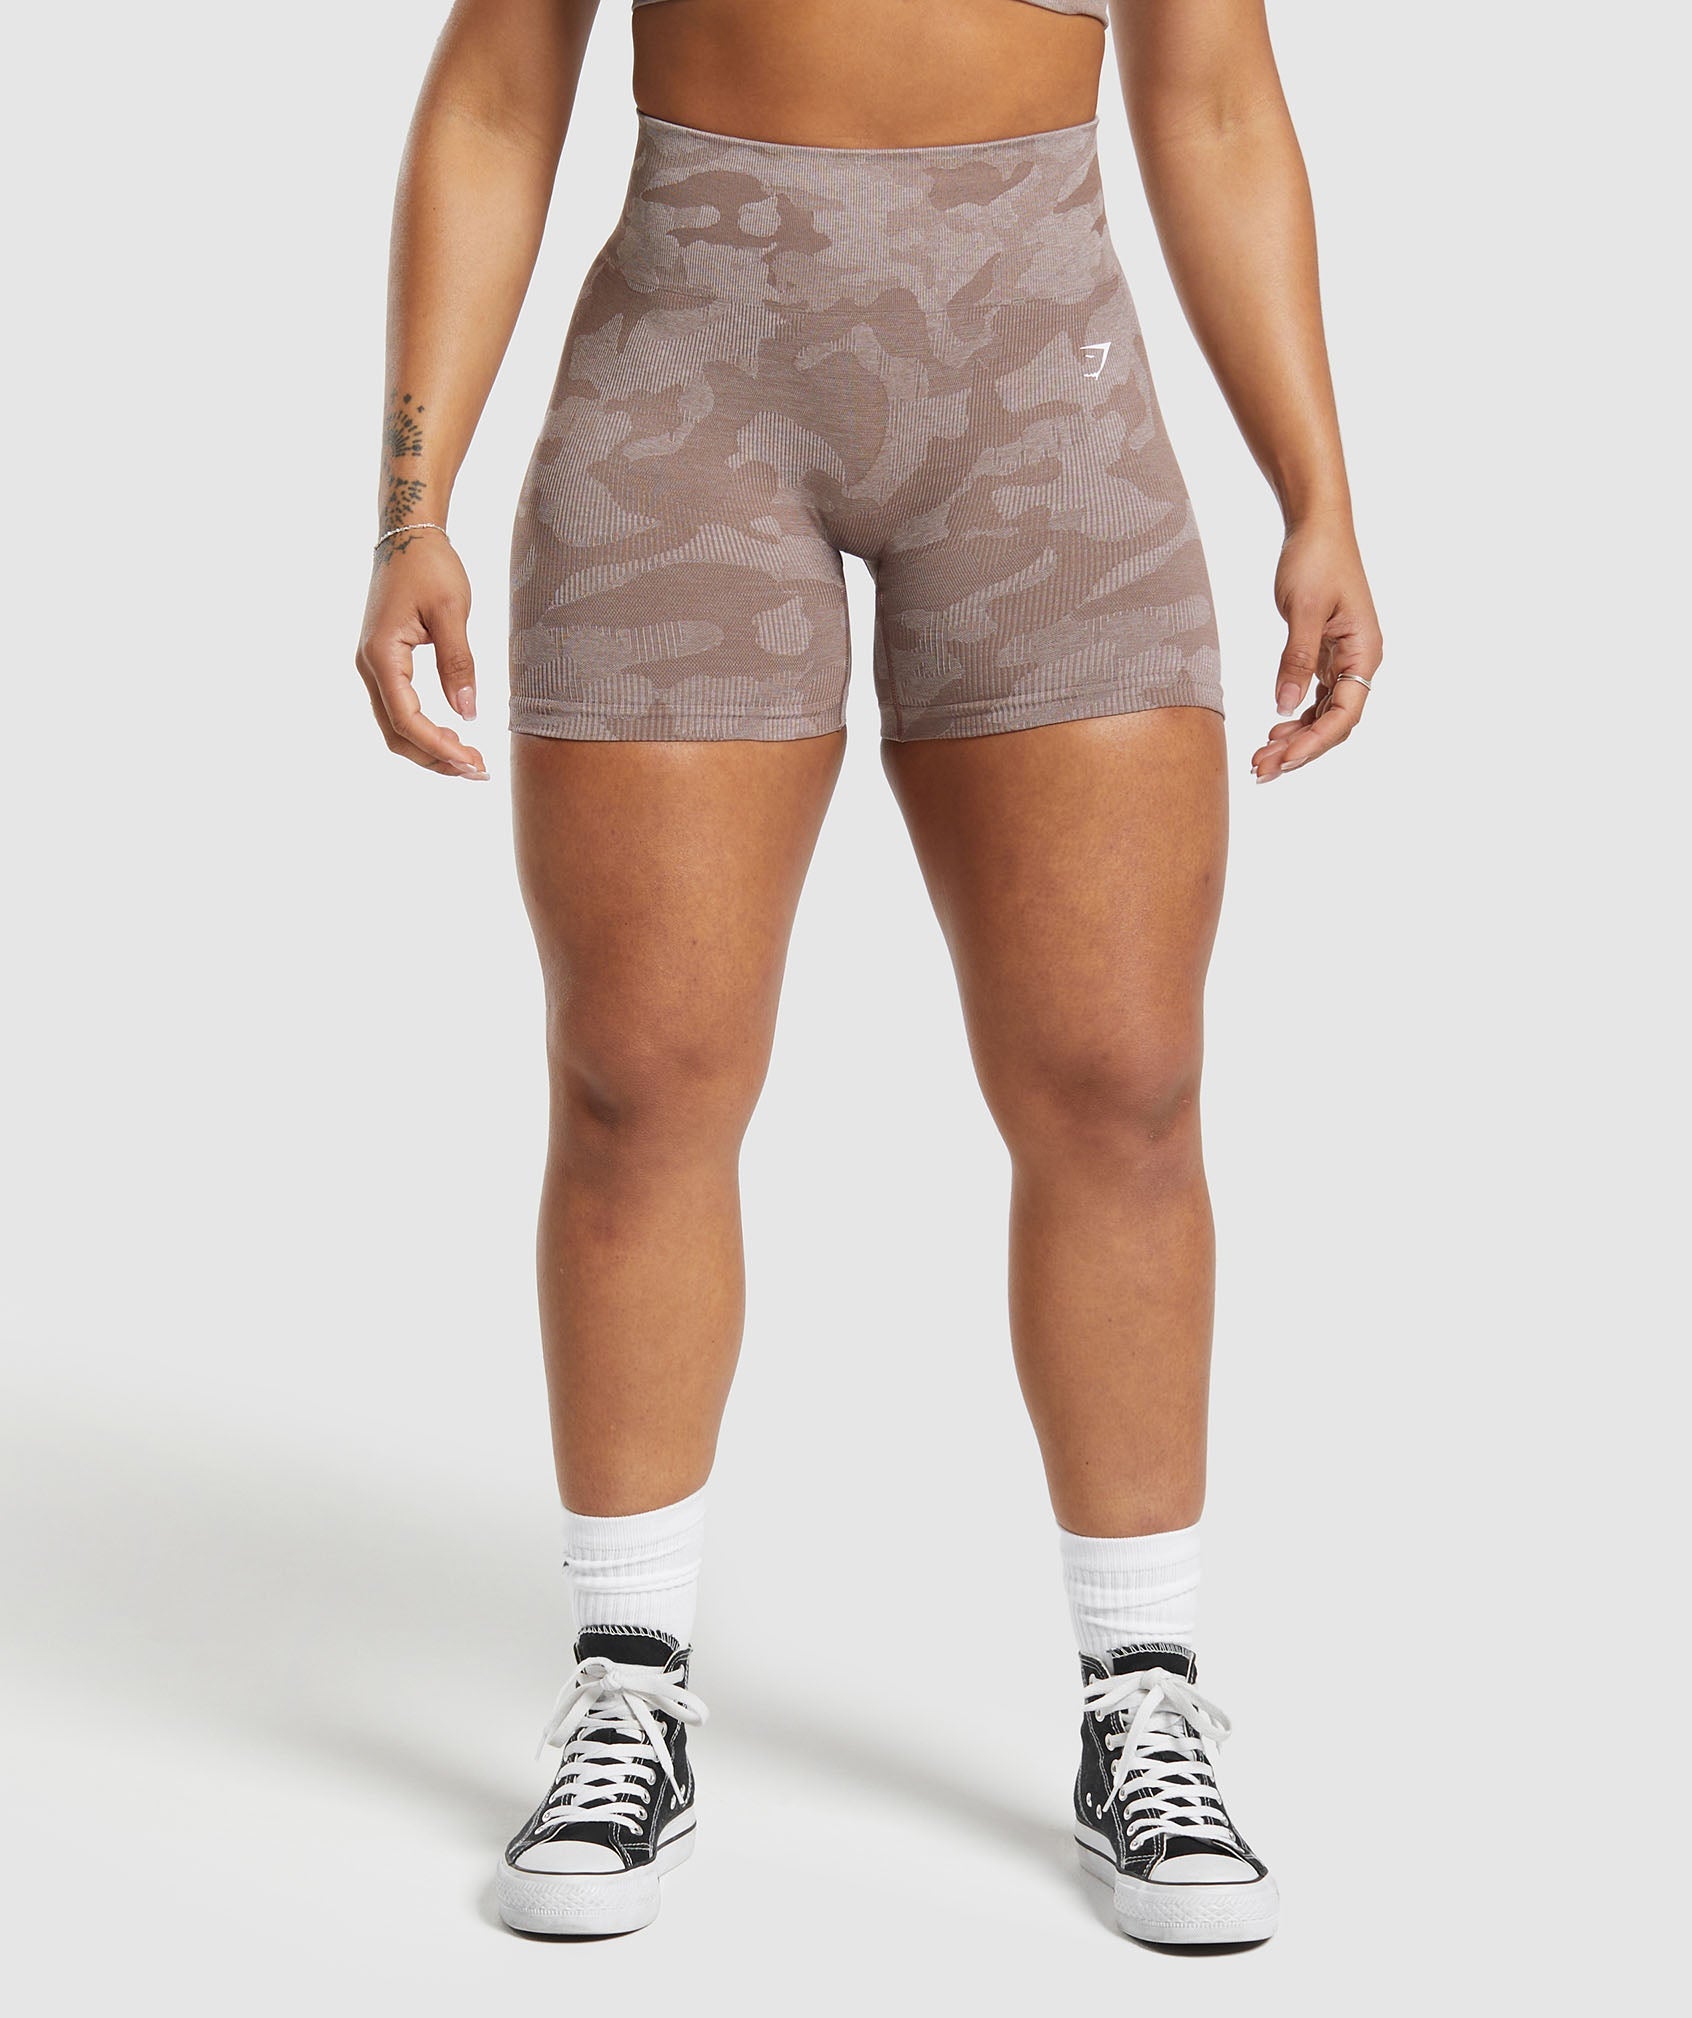 Adapt Camo Seamless Shorts in Mocha Mauve/Stone Pink